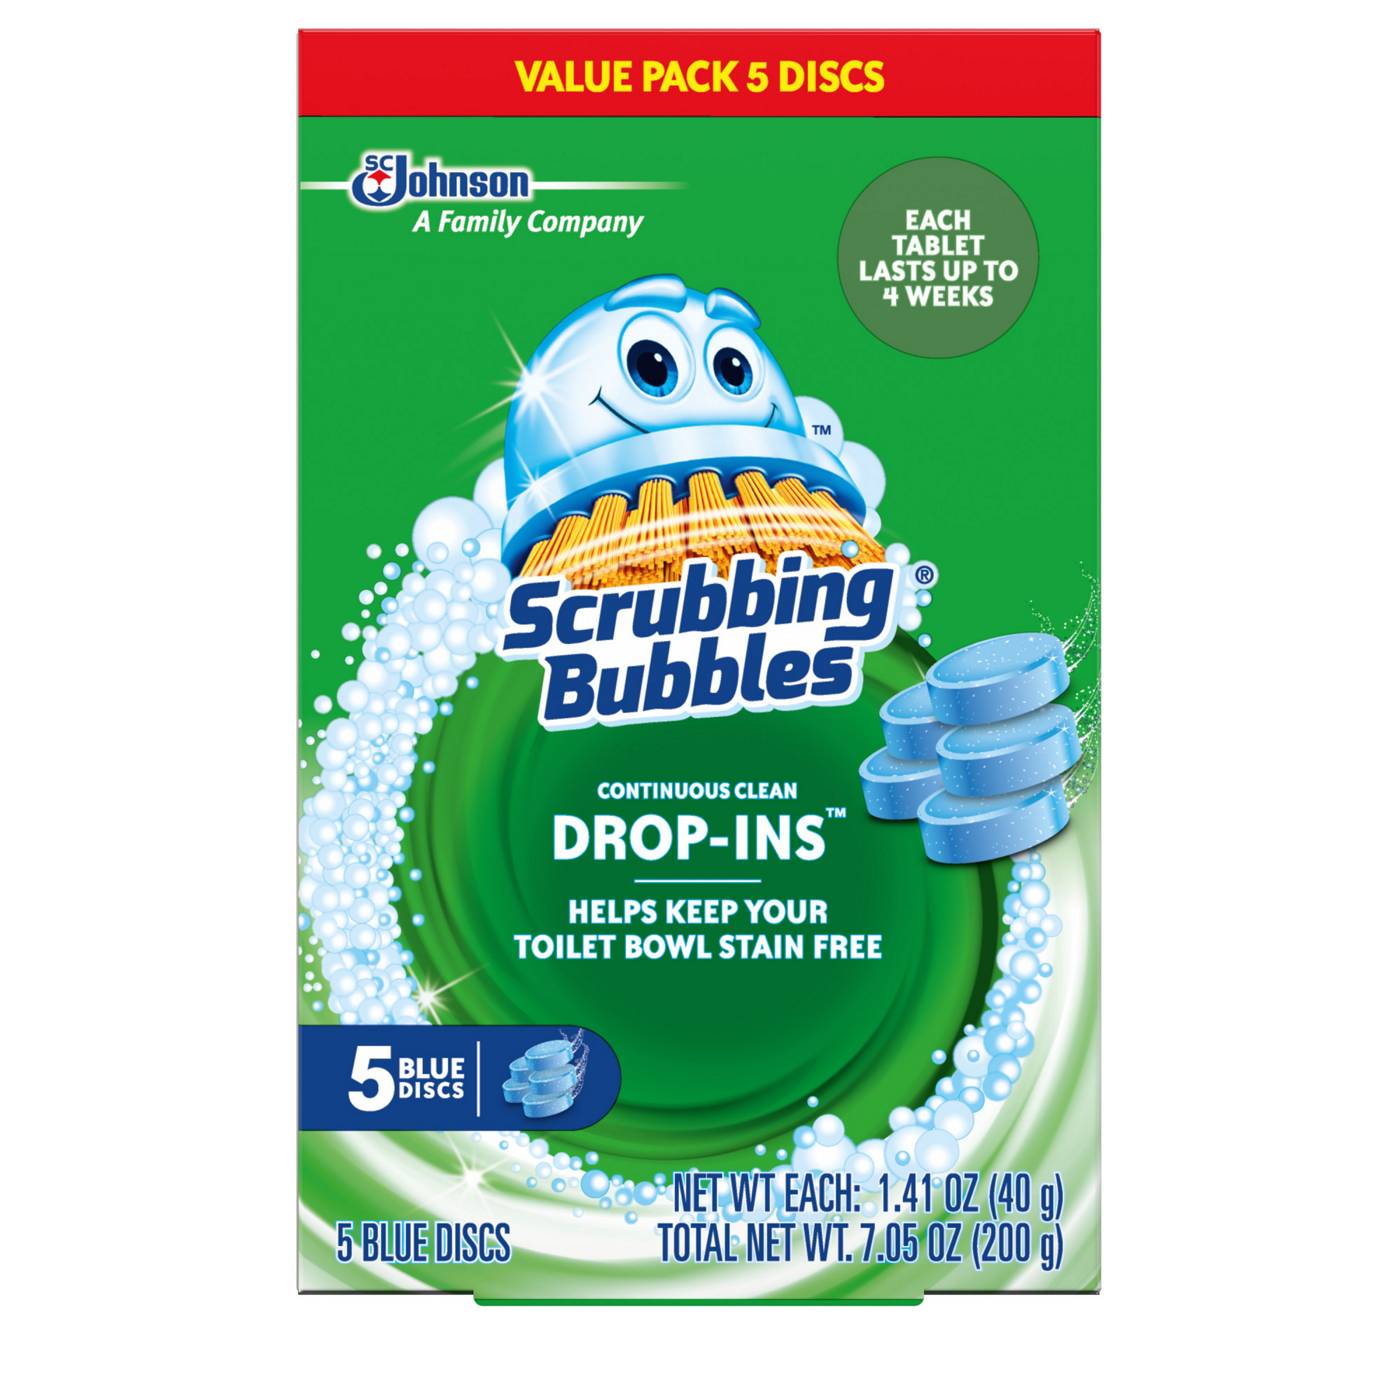 Scrubbing Bubbles Continuous Clean Drop-Ins Value Pack; image 1 of 7